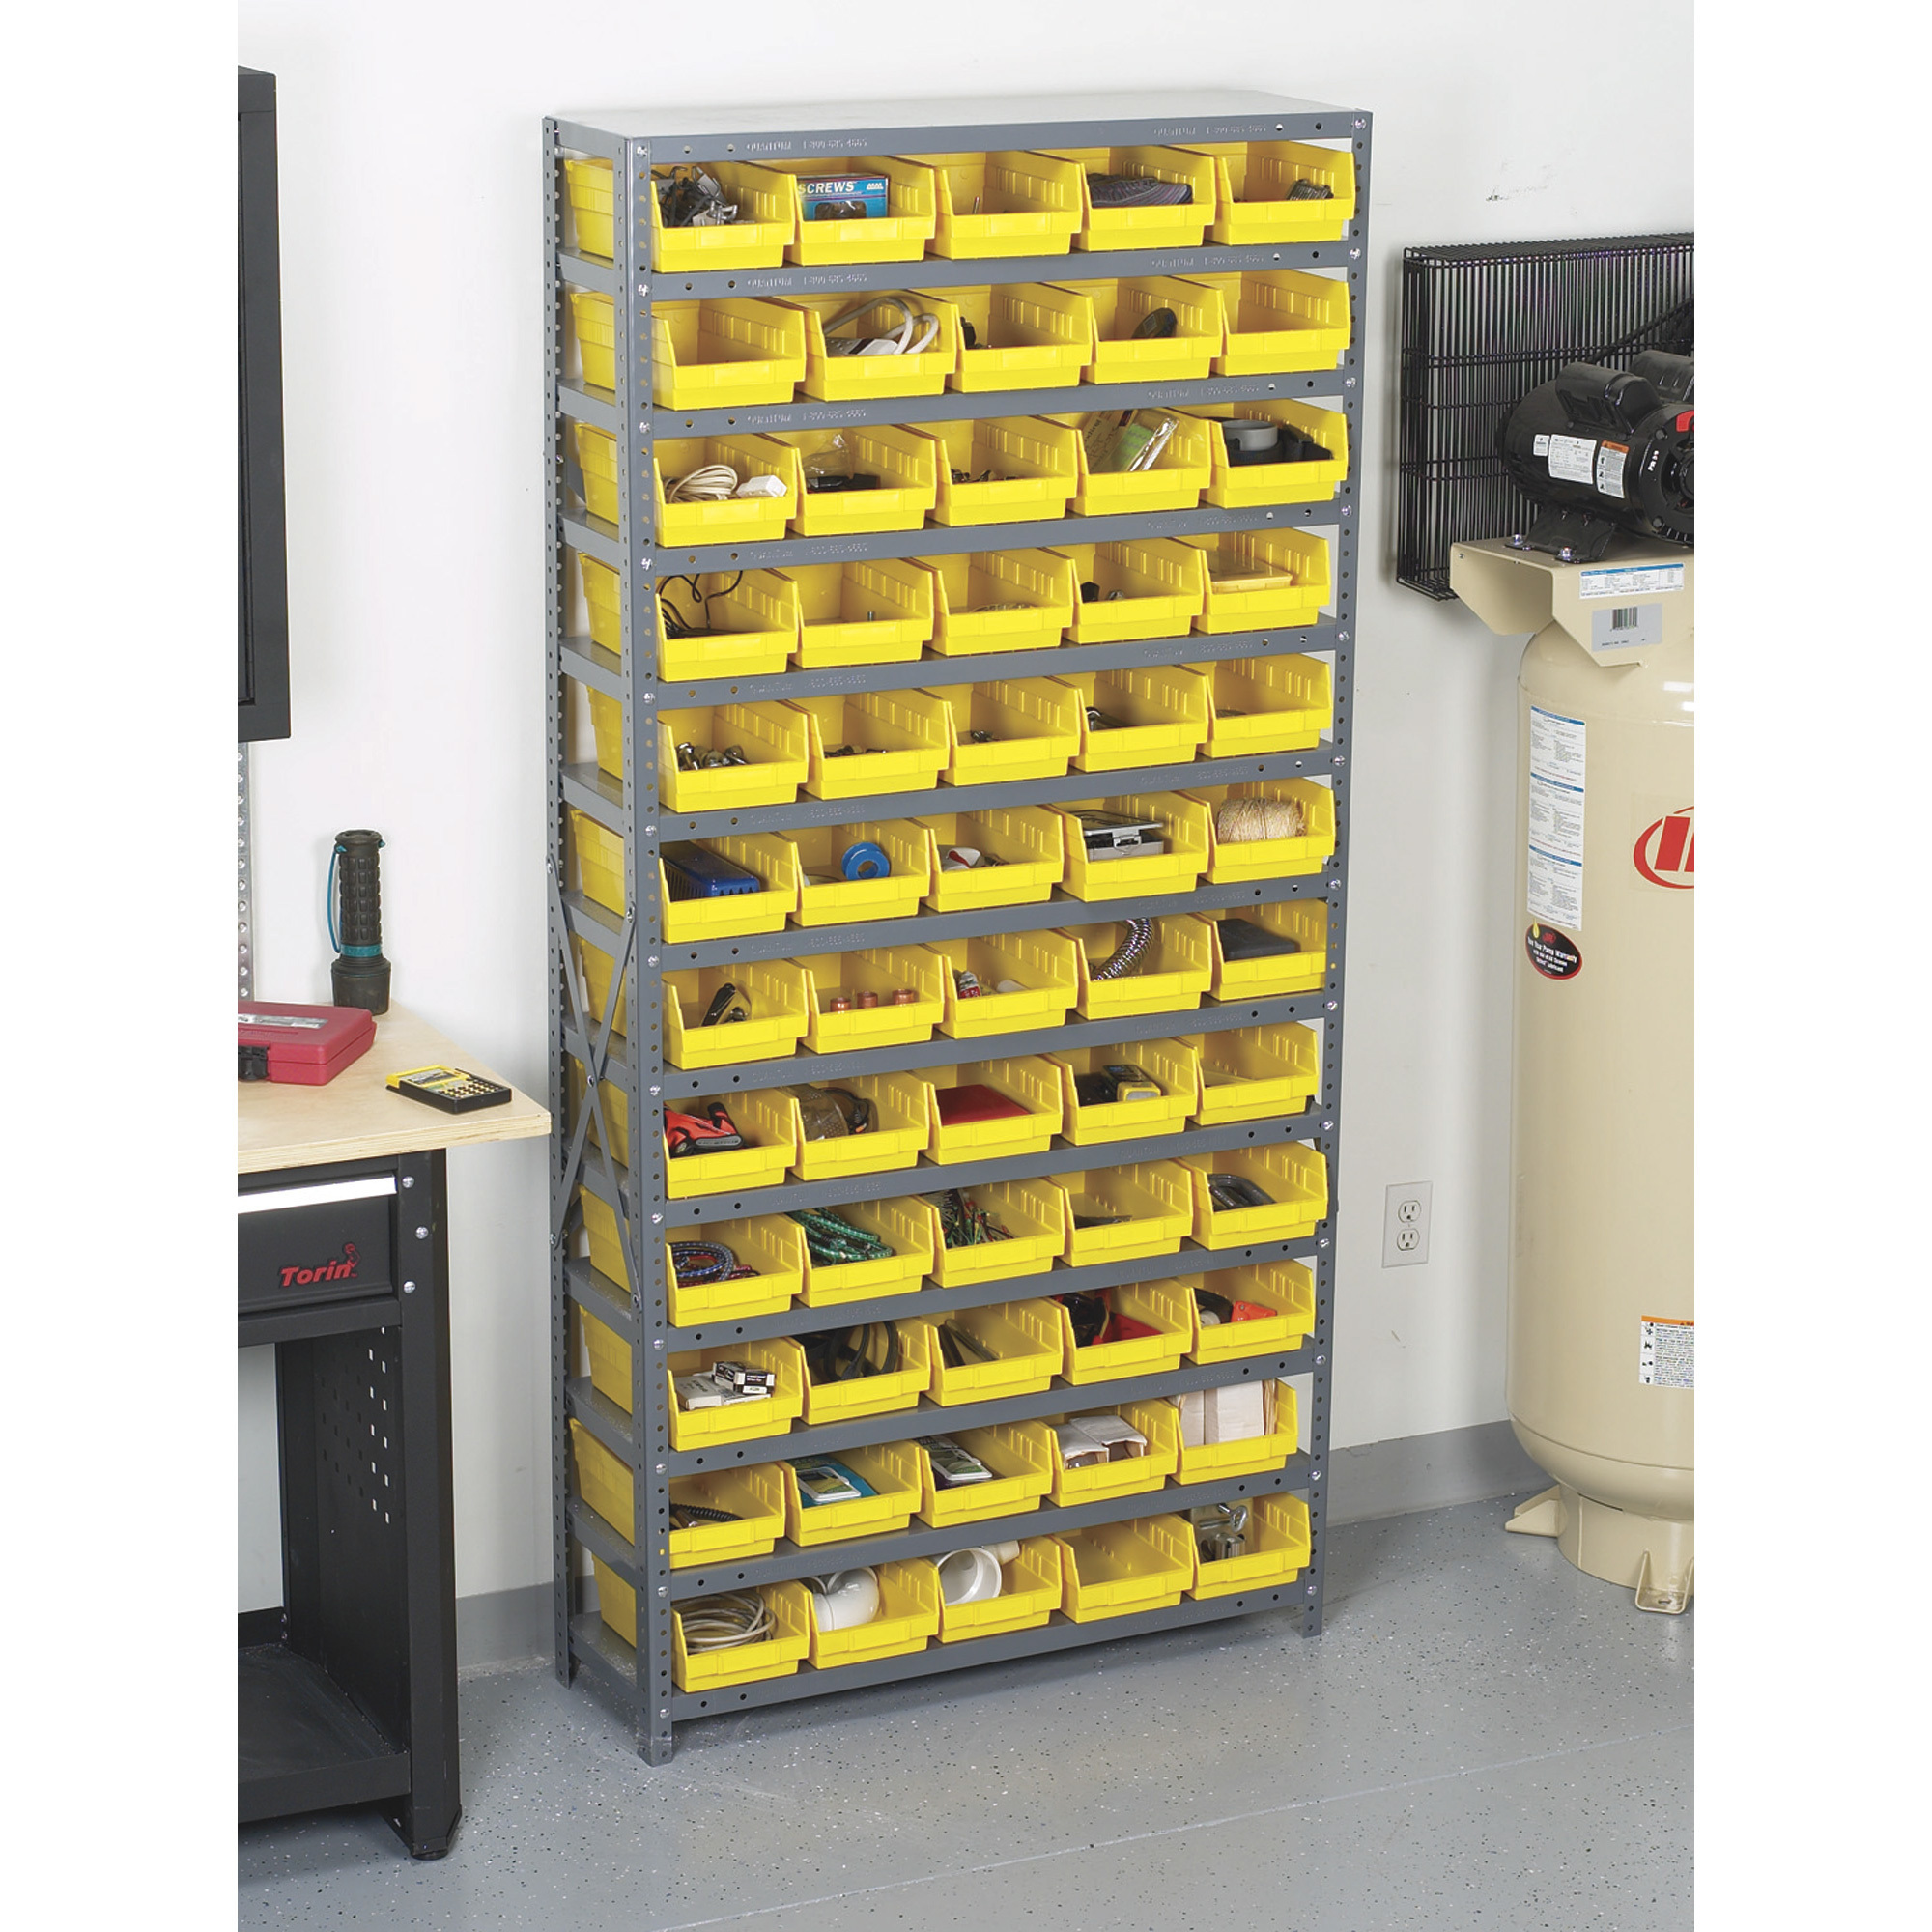 Quantum Economy Shelf Storage Units with Small Bins Bin Color: Ivory